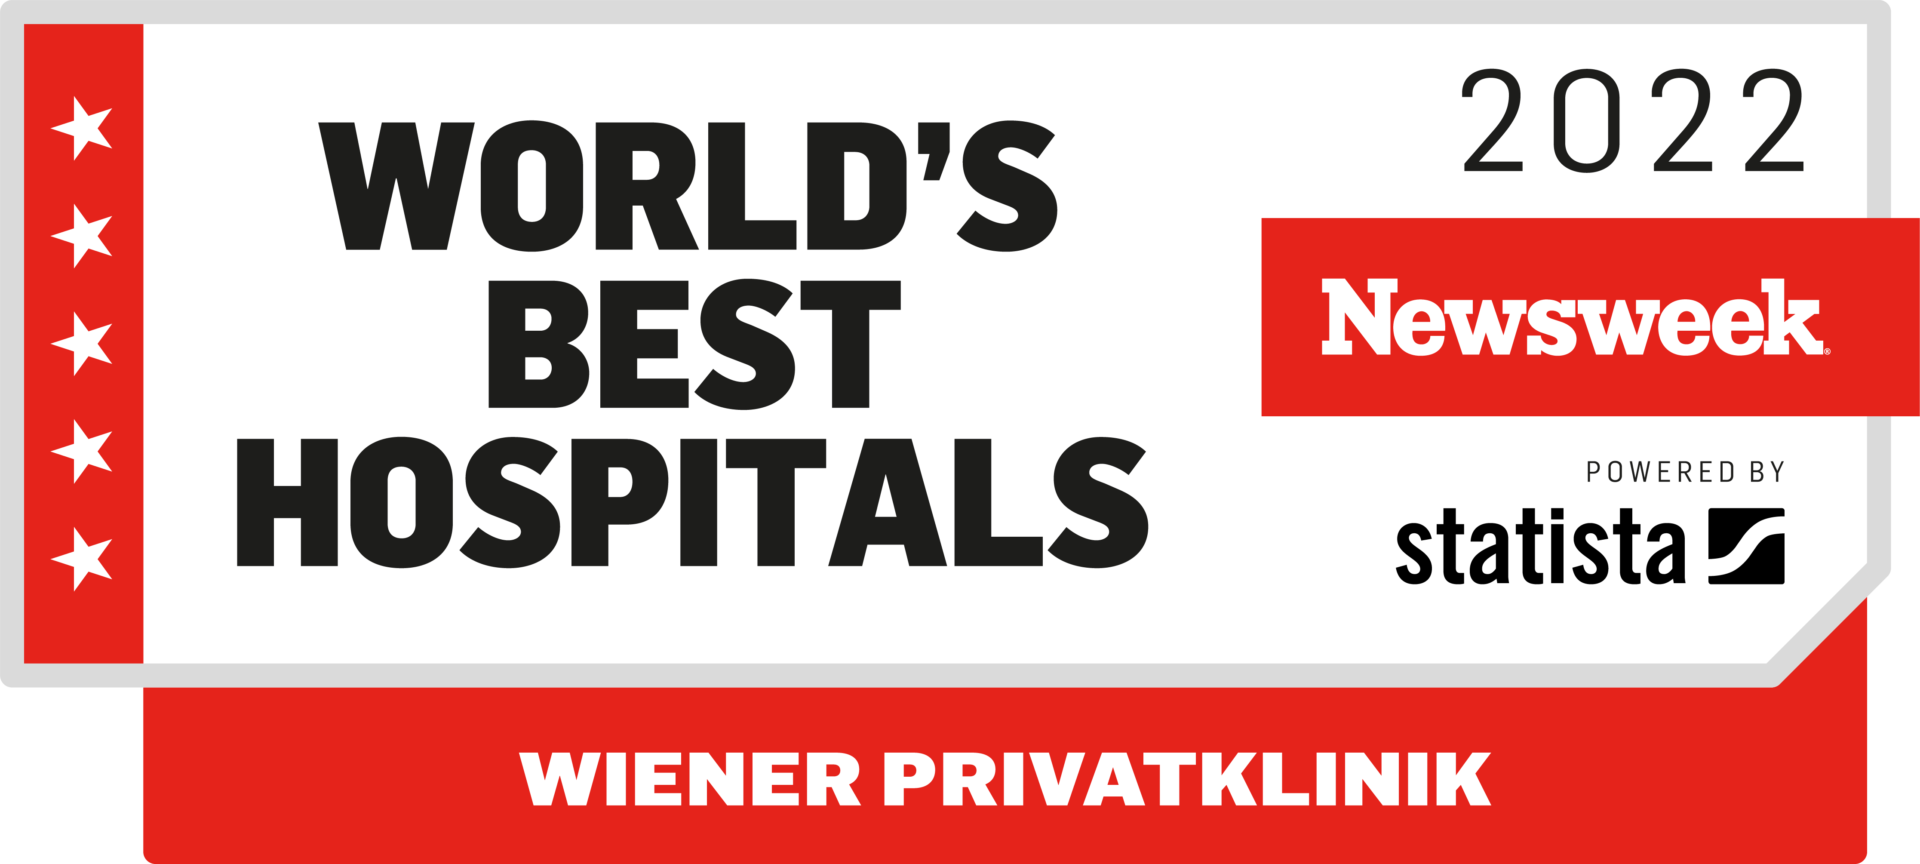 World’s Best Hospitals 2022